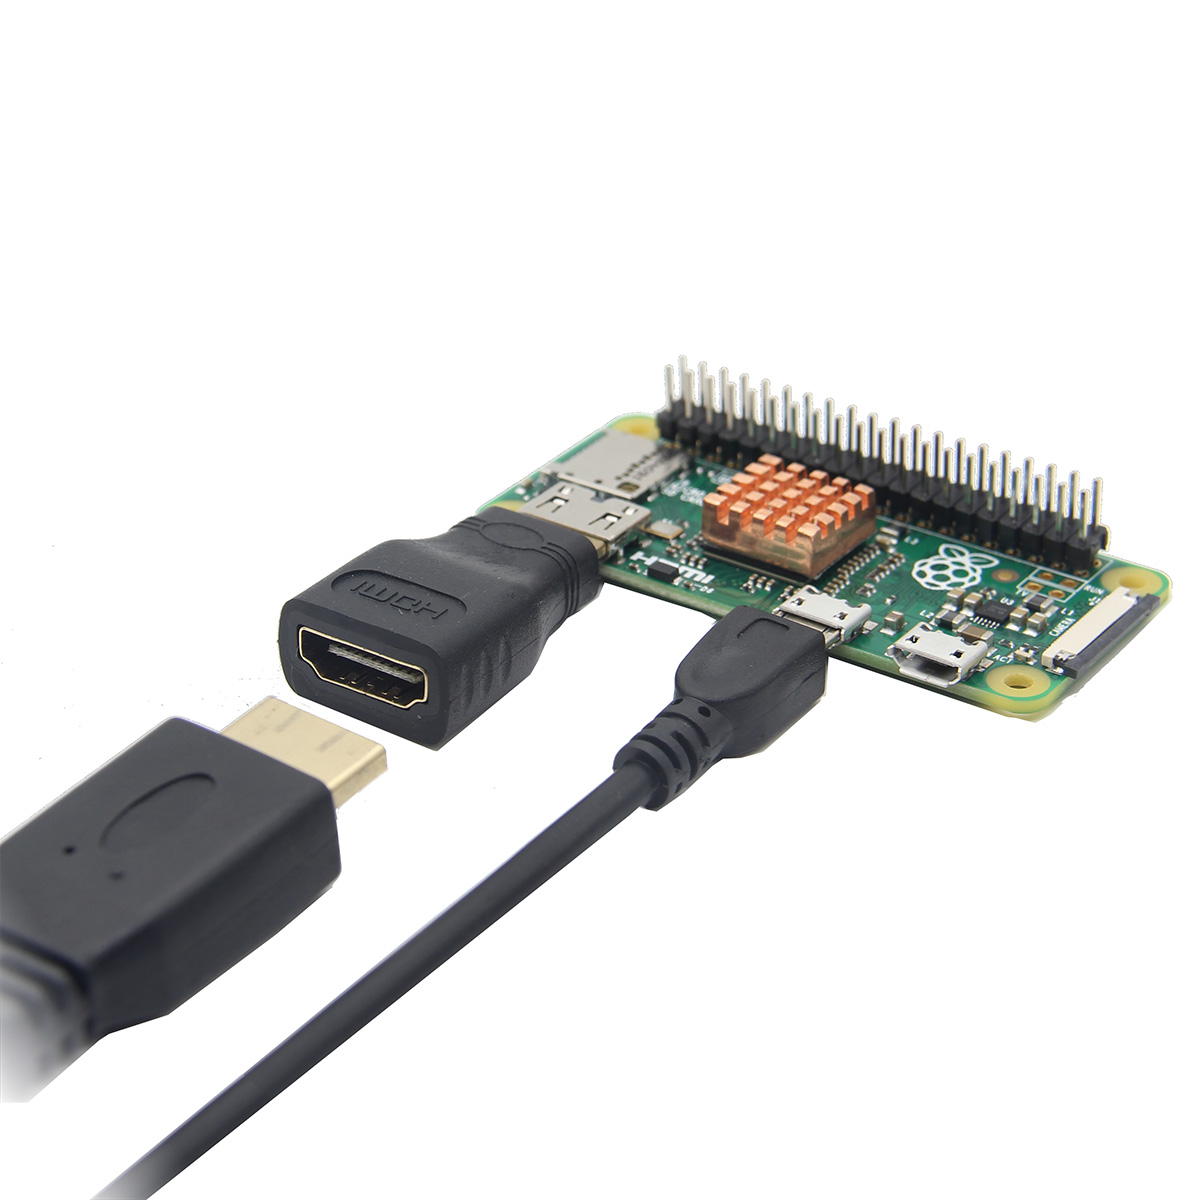 5-in-1 GPIO Cable + USB OTG Cable + Mini HDMI to HDMI Adapter + 2x20 Pin Header + Heat Sink Base Kit For Raspberry Pi Zero / Raspberry Pi Zero W. 10